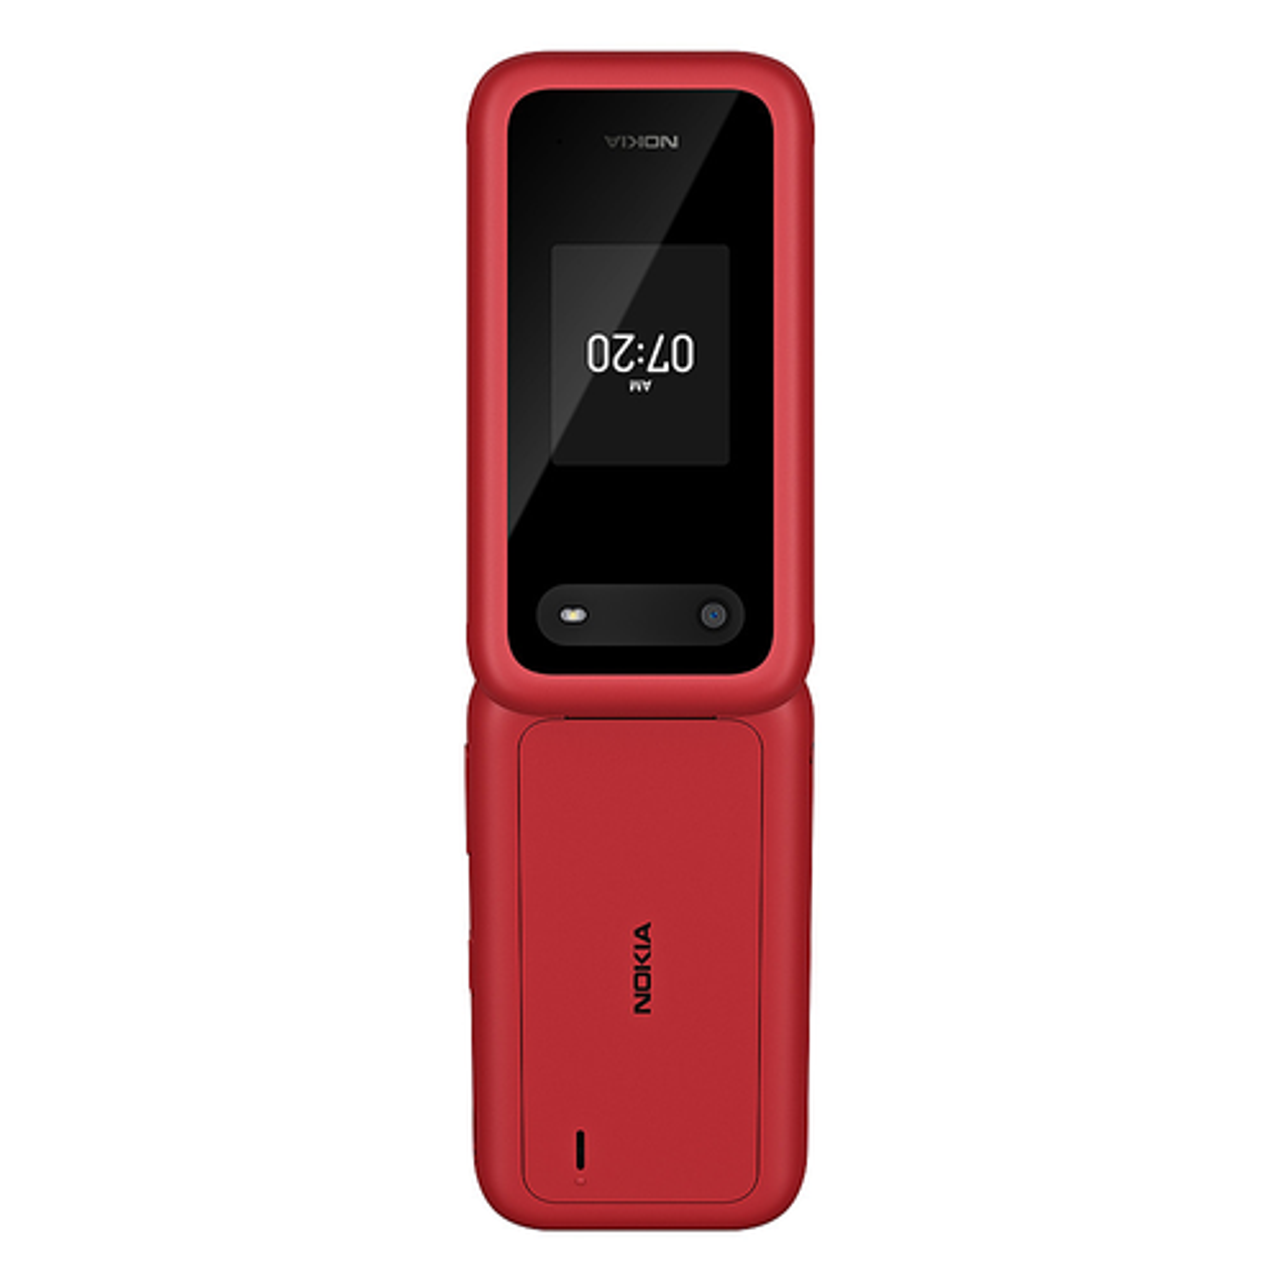 Nokia - 2780 Flip Phone (Unlocked) - Red